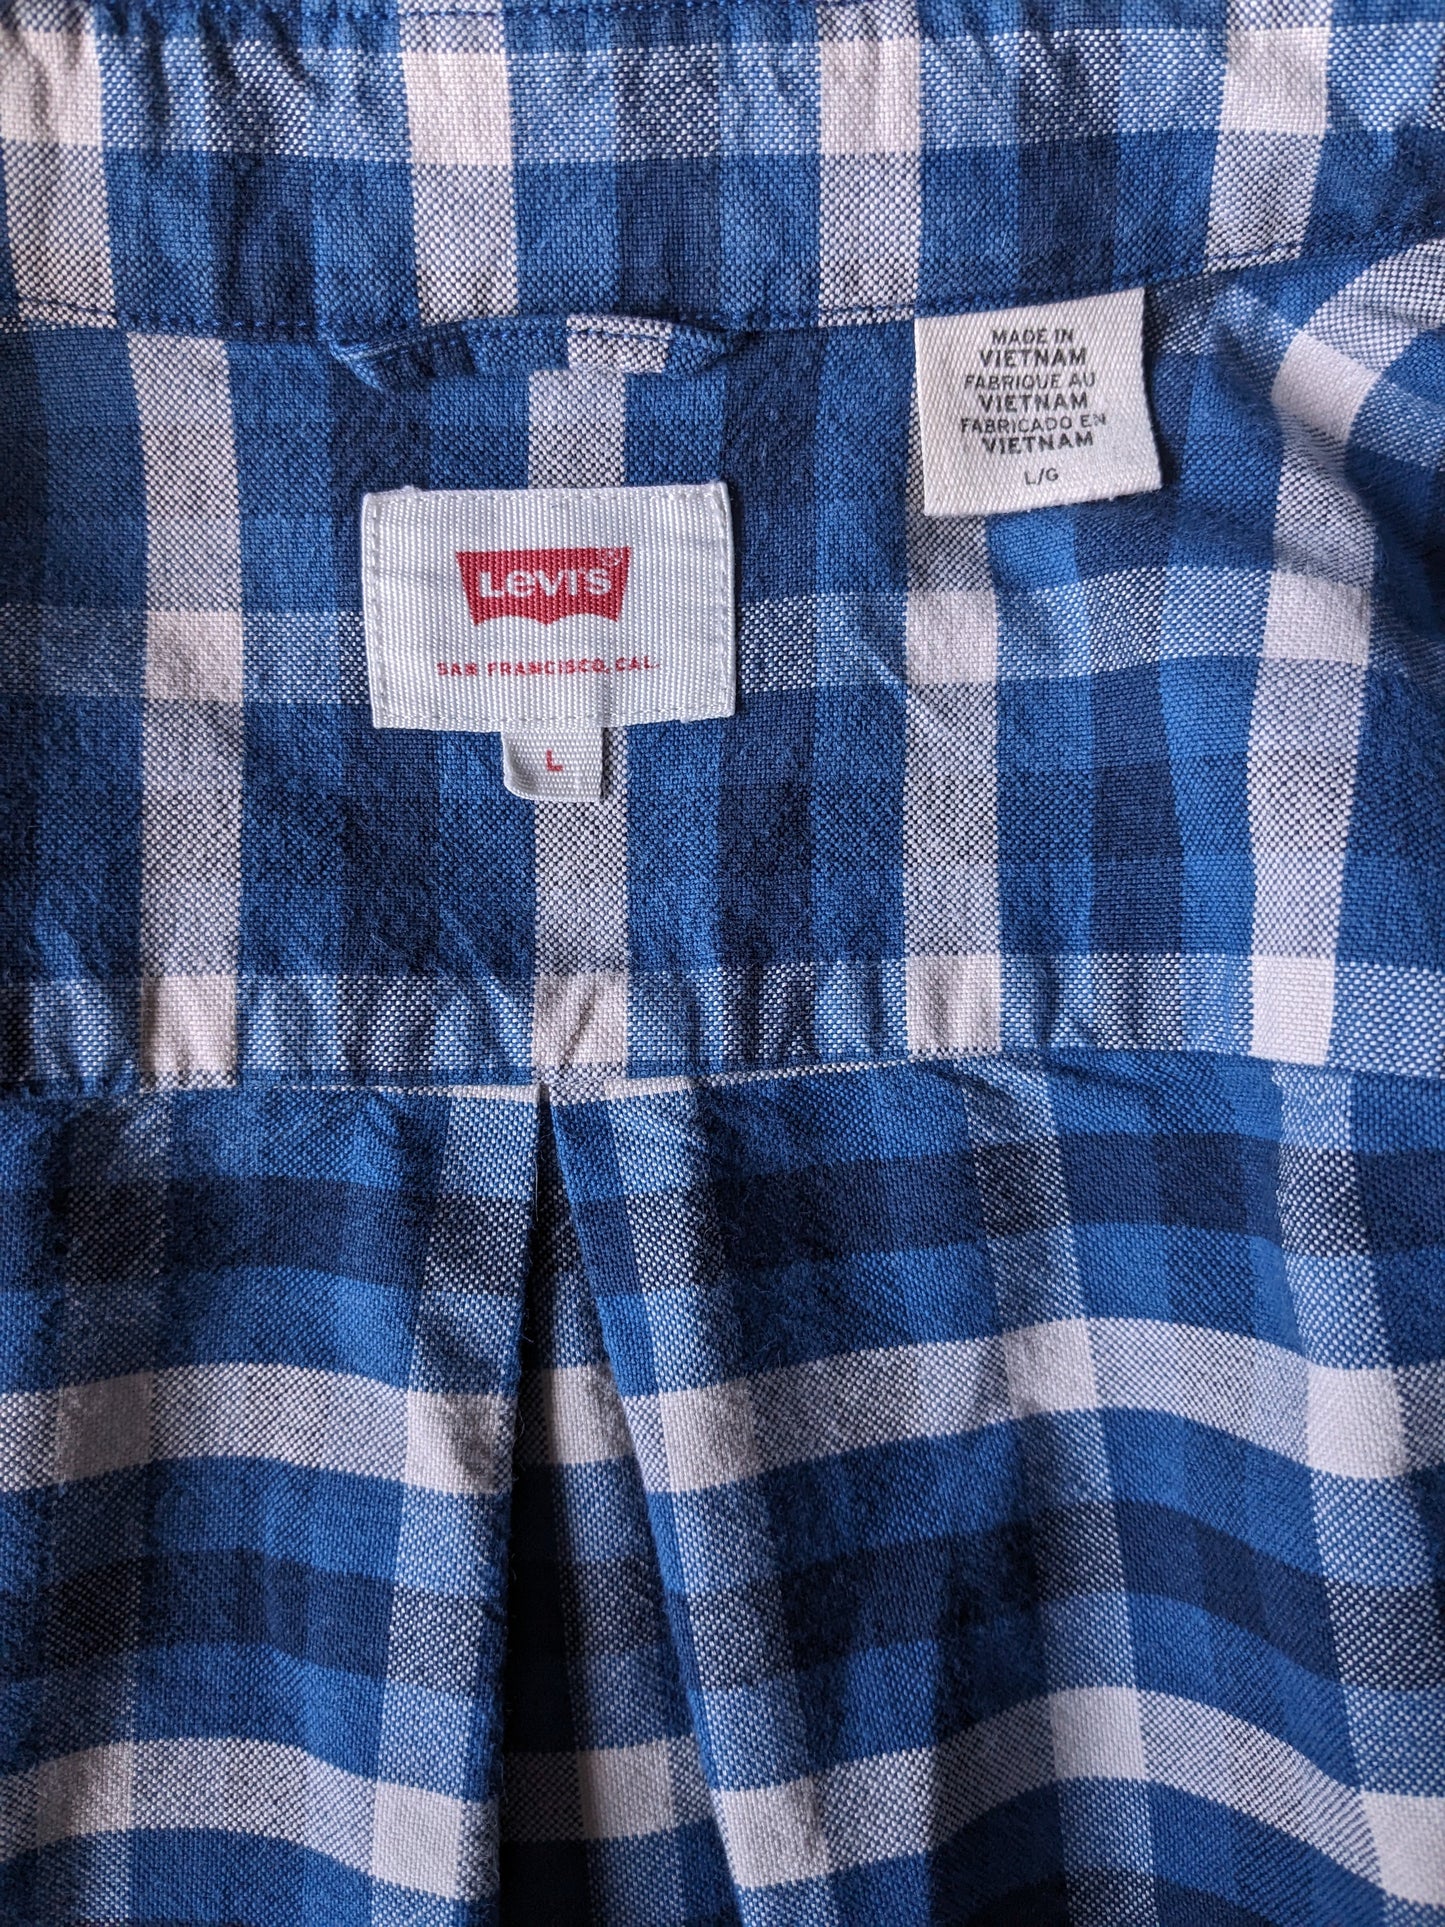 Levi's flannel shirt. Blue white checkered. Size L.